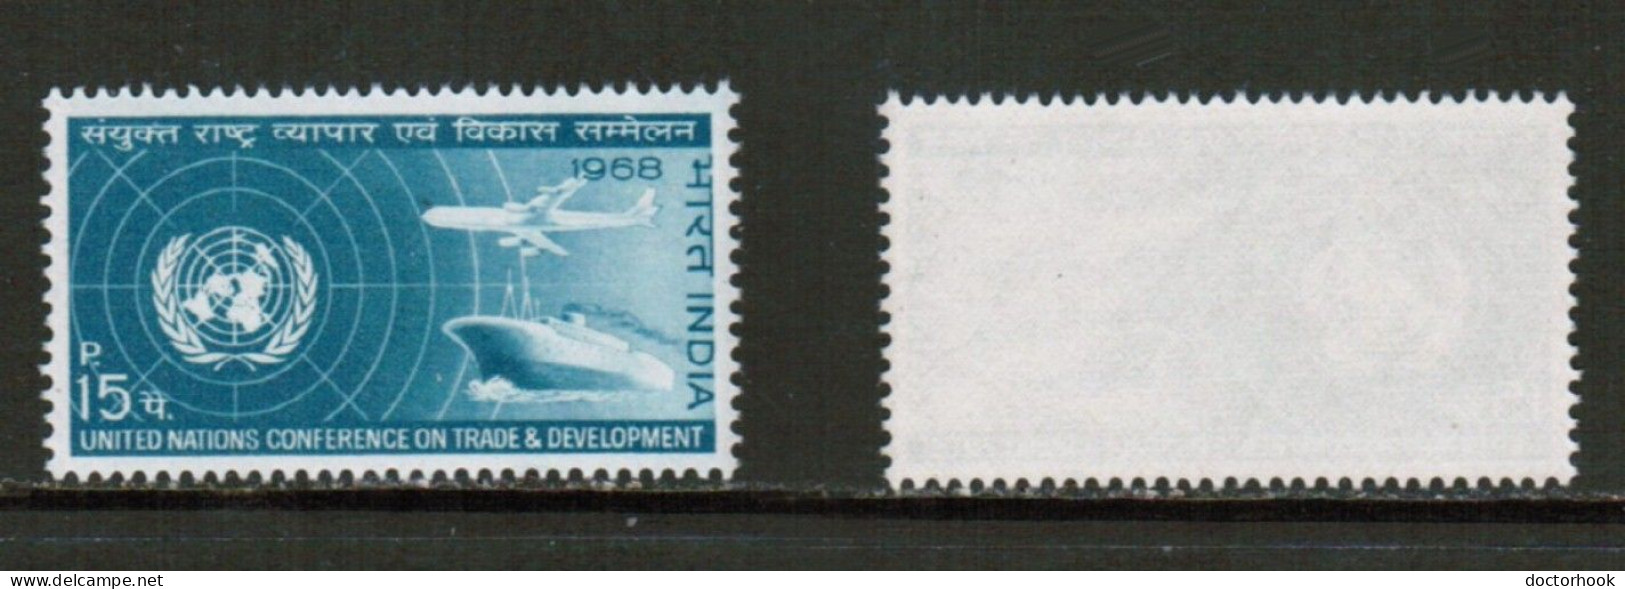 INDIA   Scott # 463** MINT NH (CONDITION AS PER SCAN) (Stamp Scan # 919-9) - Ungebraucht